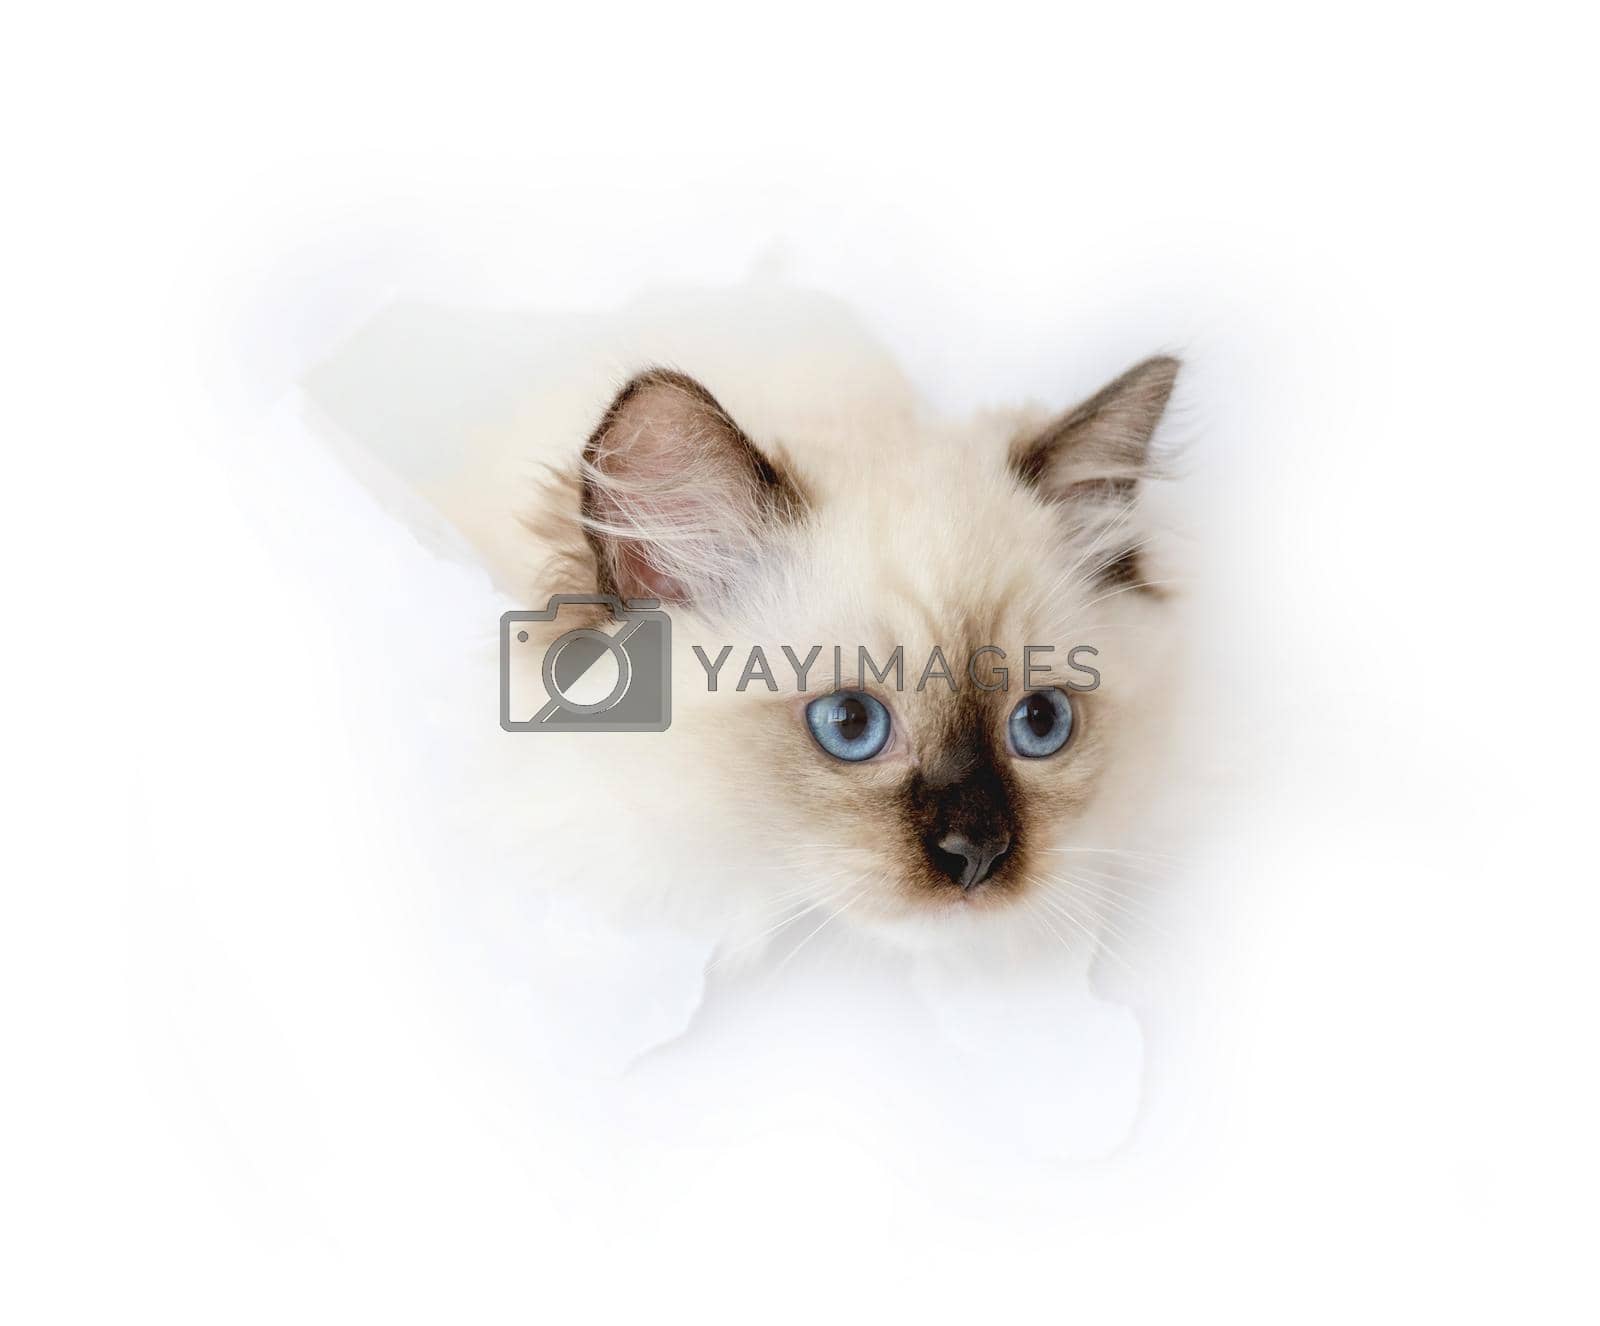 Royalty free image of Ragdoll cat in light room by tan4ikk1